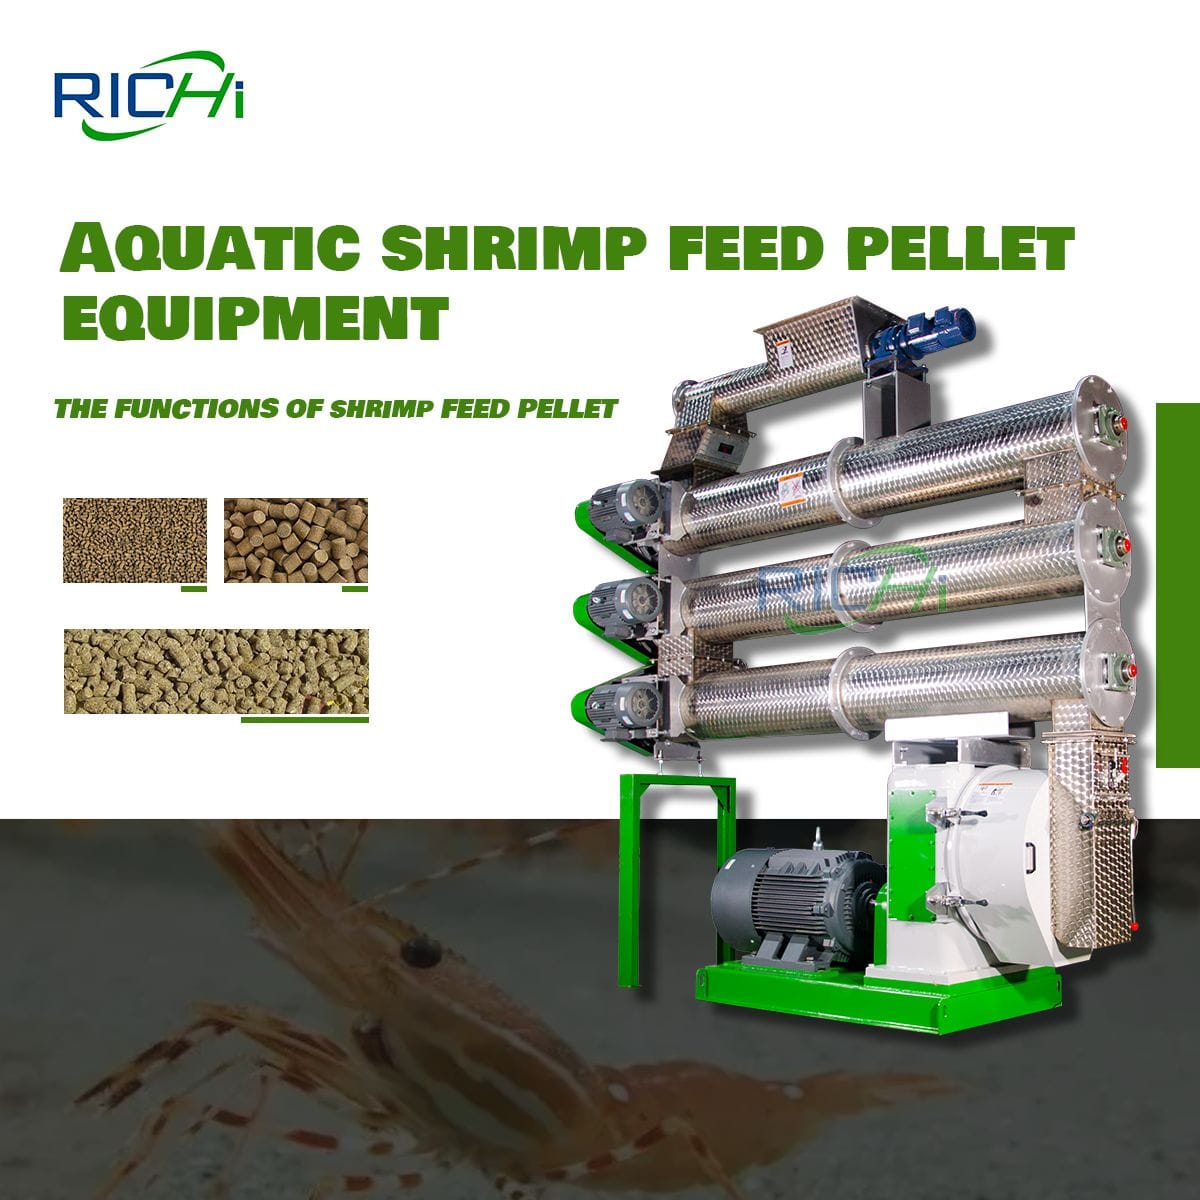 Shrimp Feed Pellet Machine